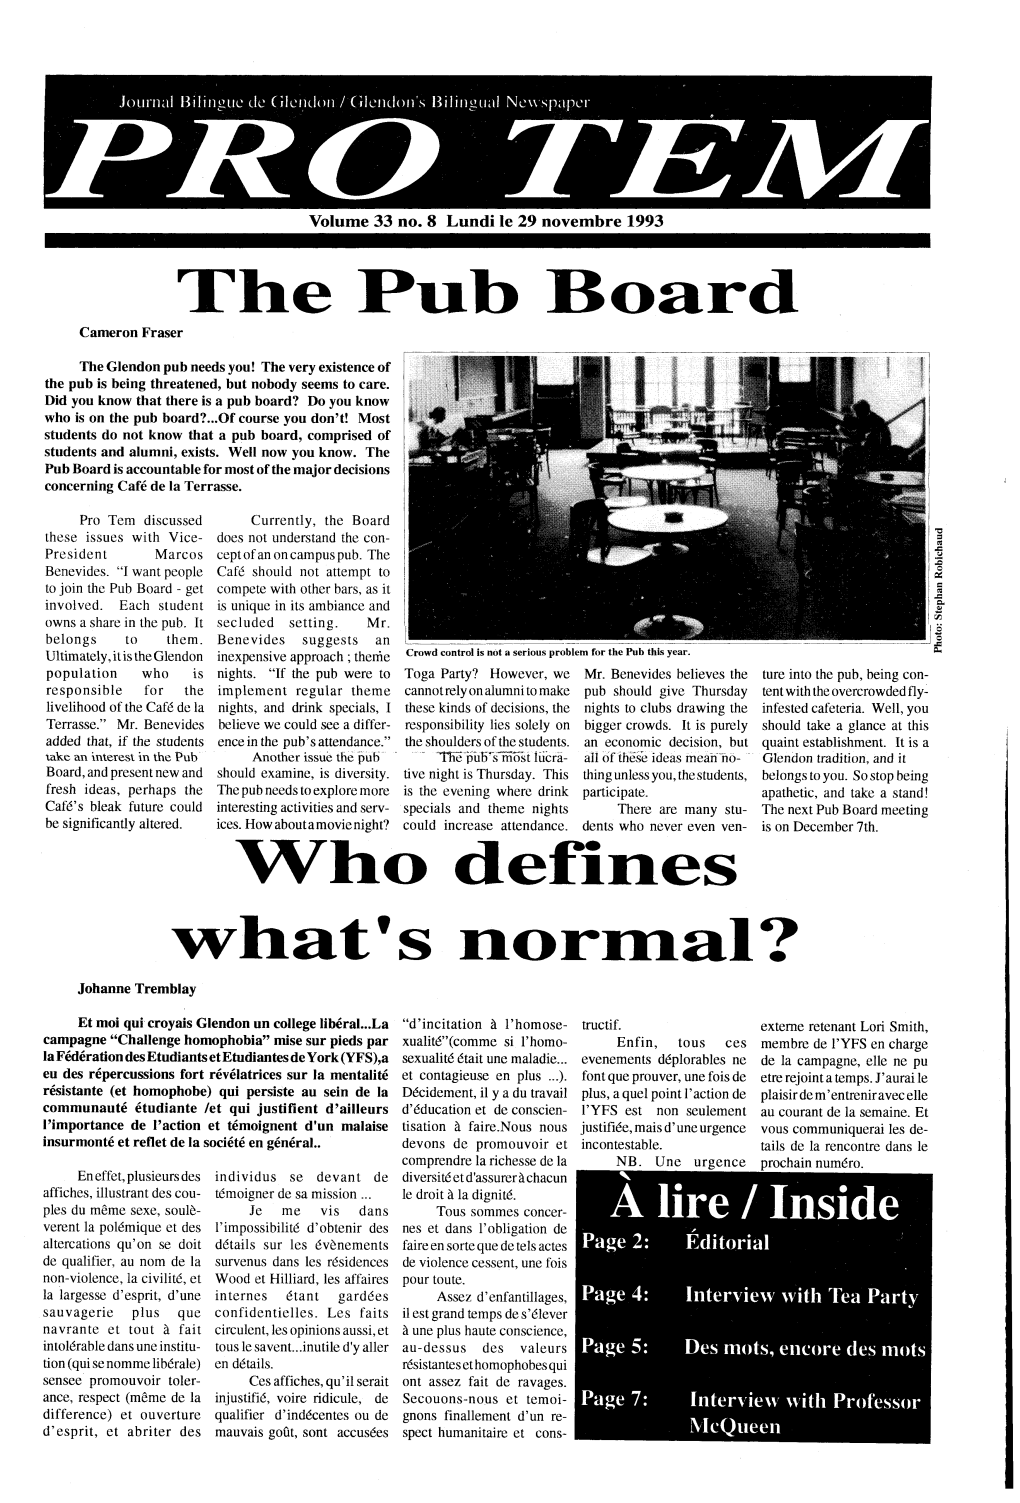 The Pub Board Ho Defines